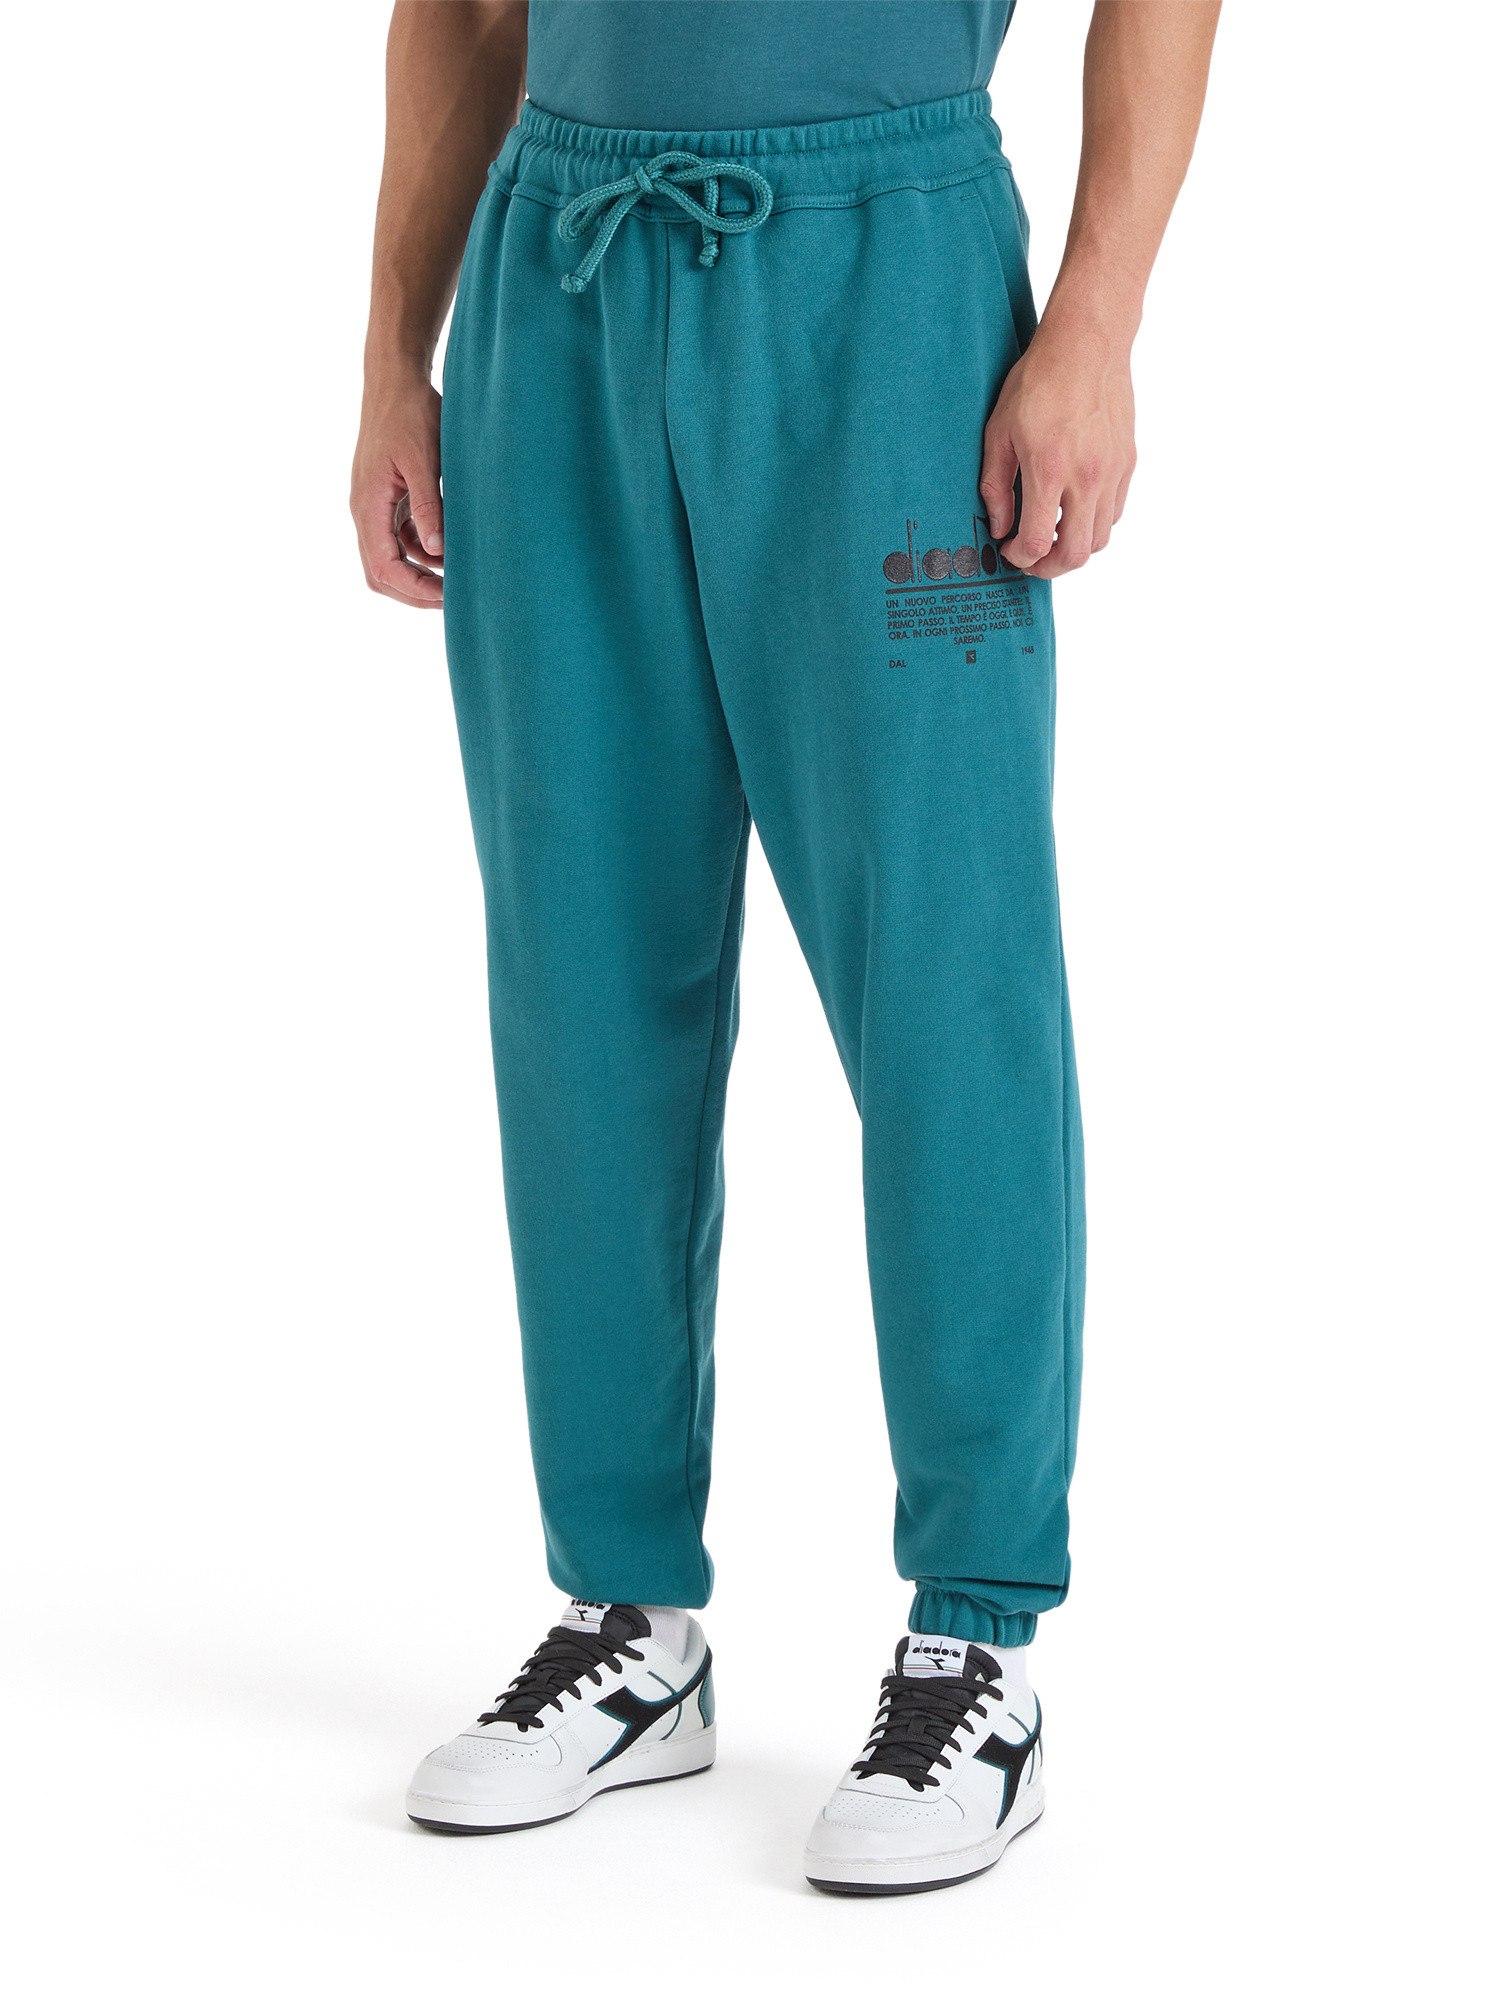 Diadora - Manifesto sports trousers with cotton print, Petroleum , large image number 4